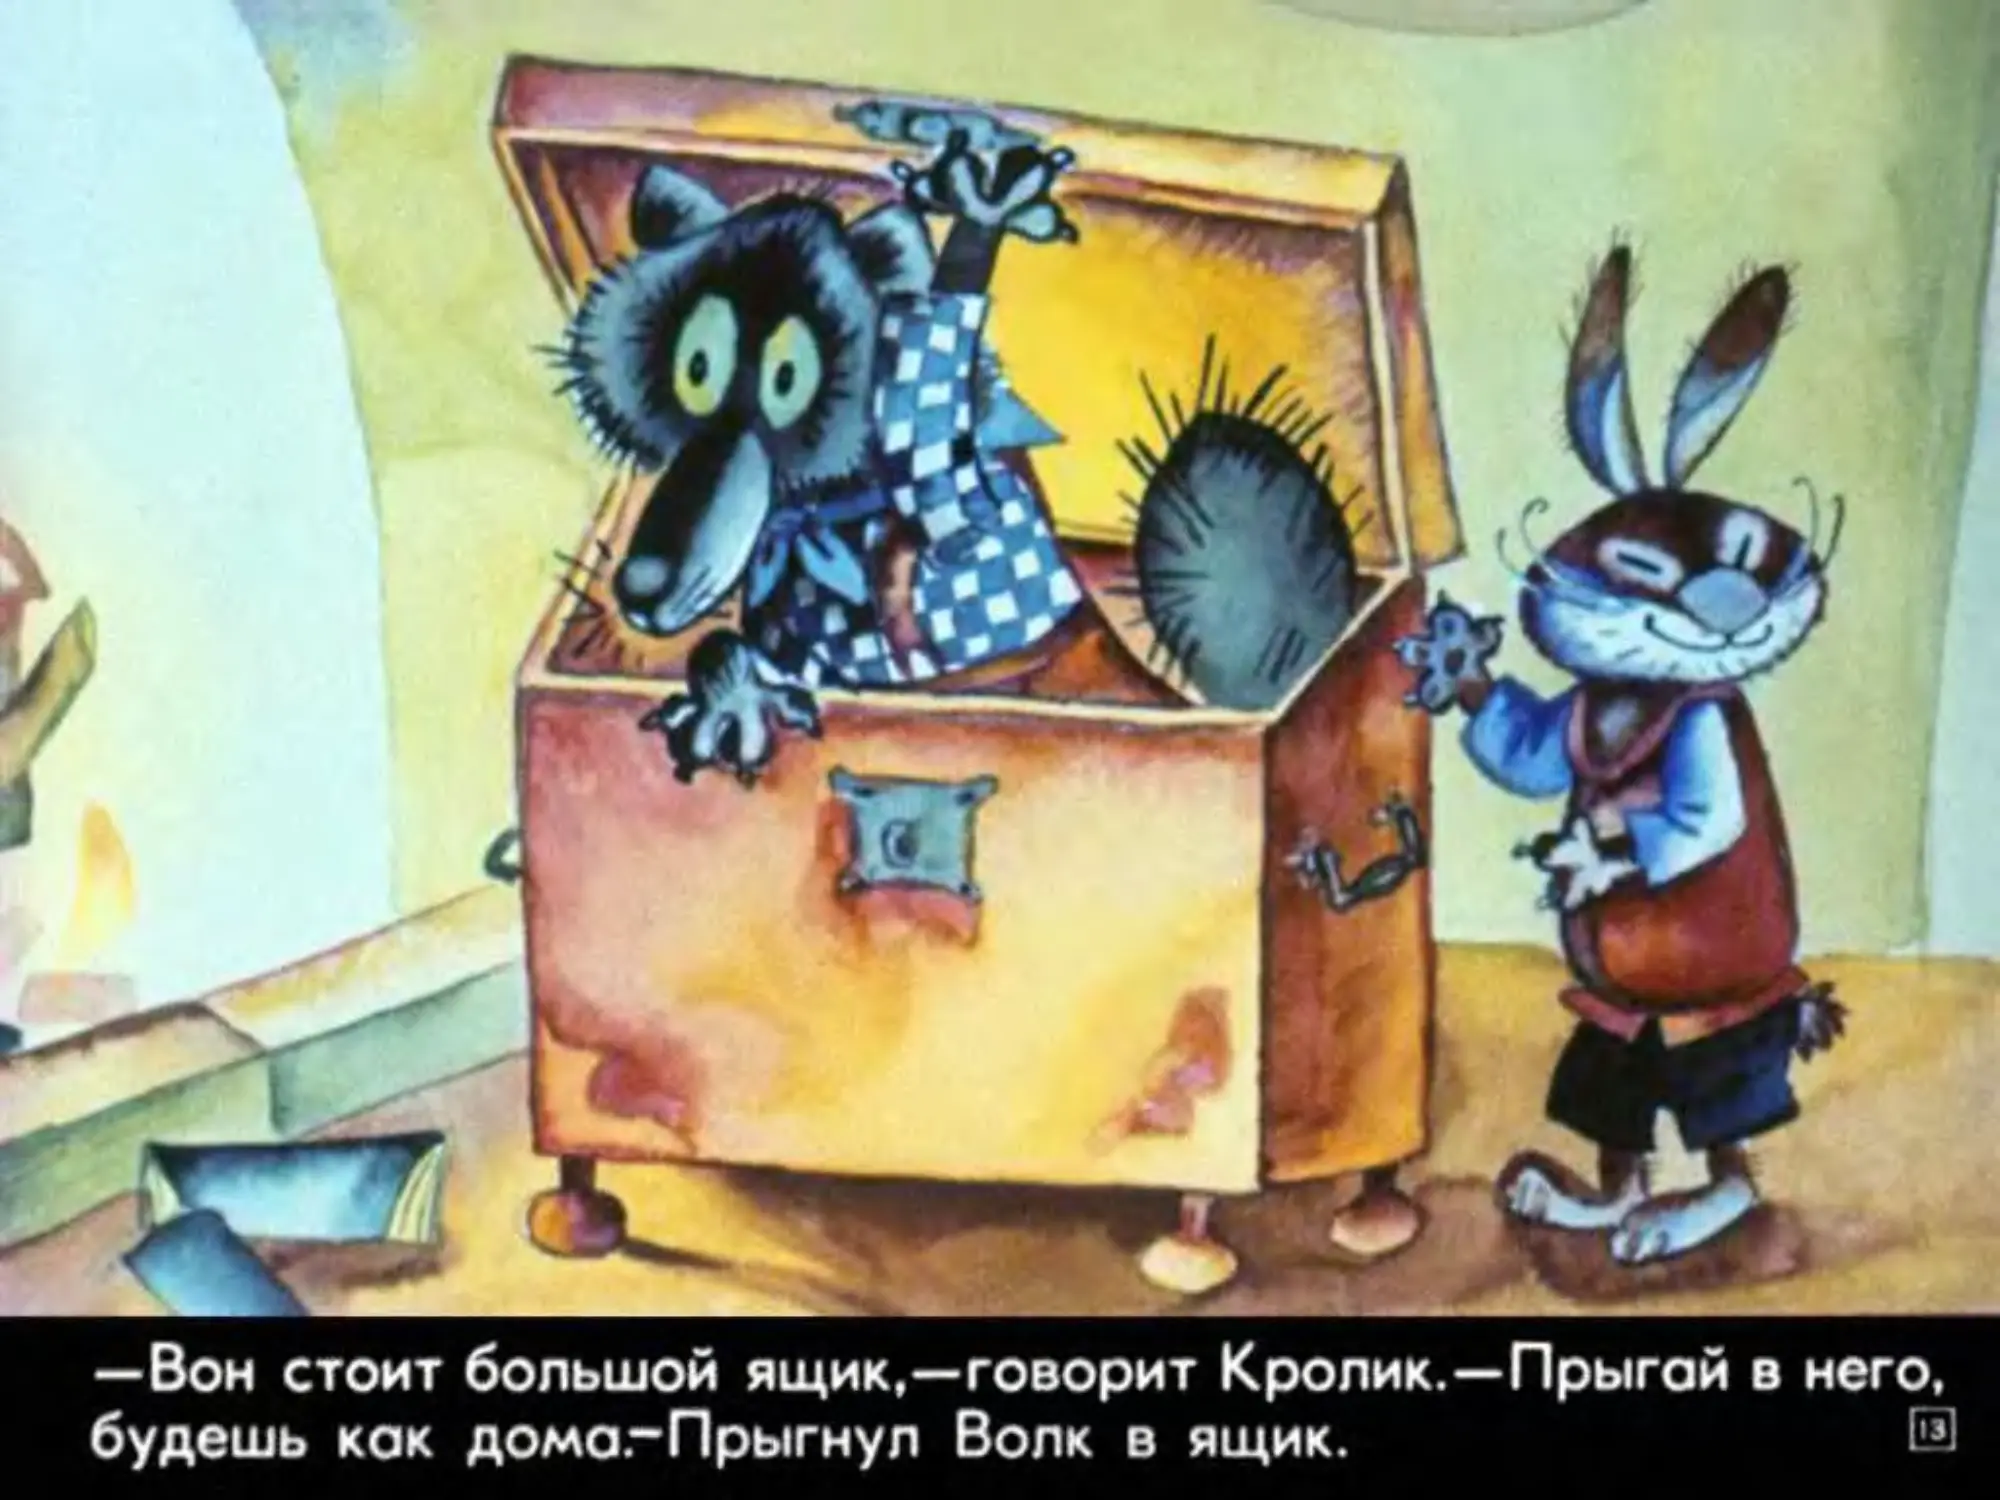 Дом братца кролика. Новоселье у братца кролика 1986. Братцы кролики.